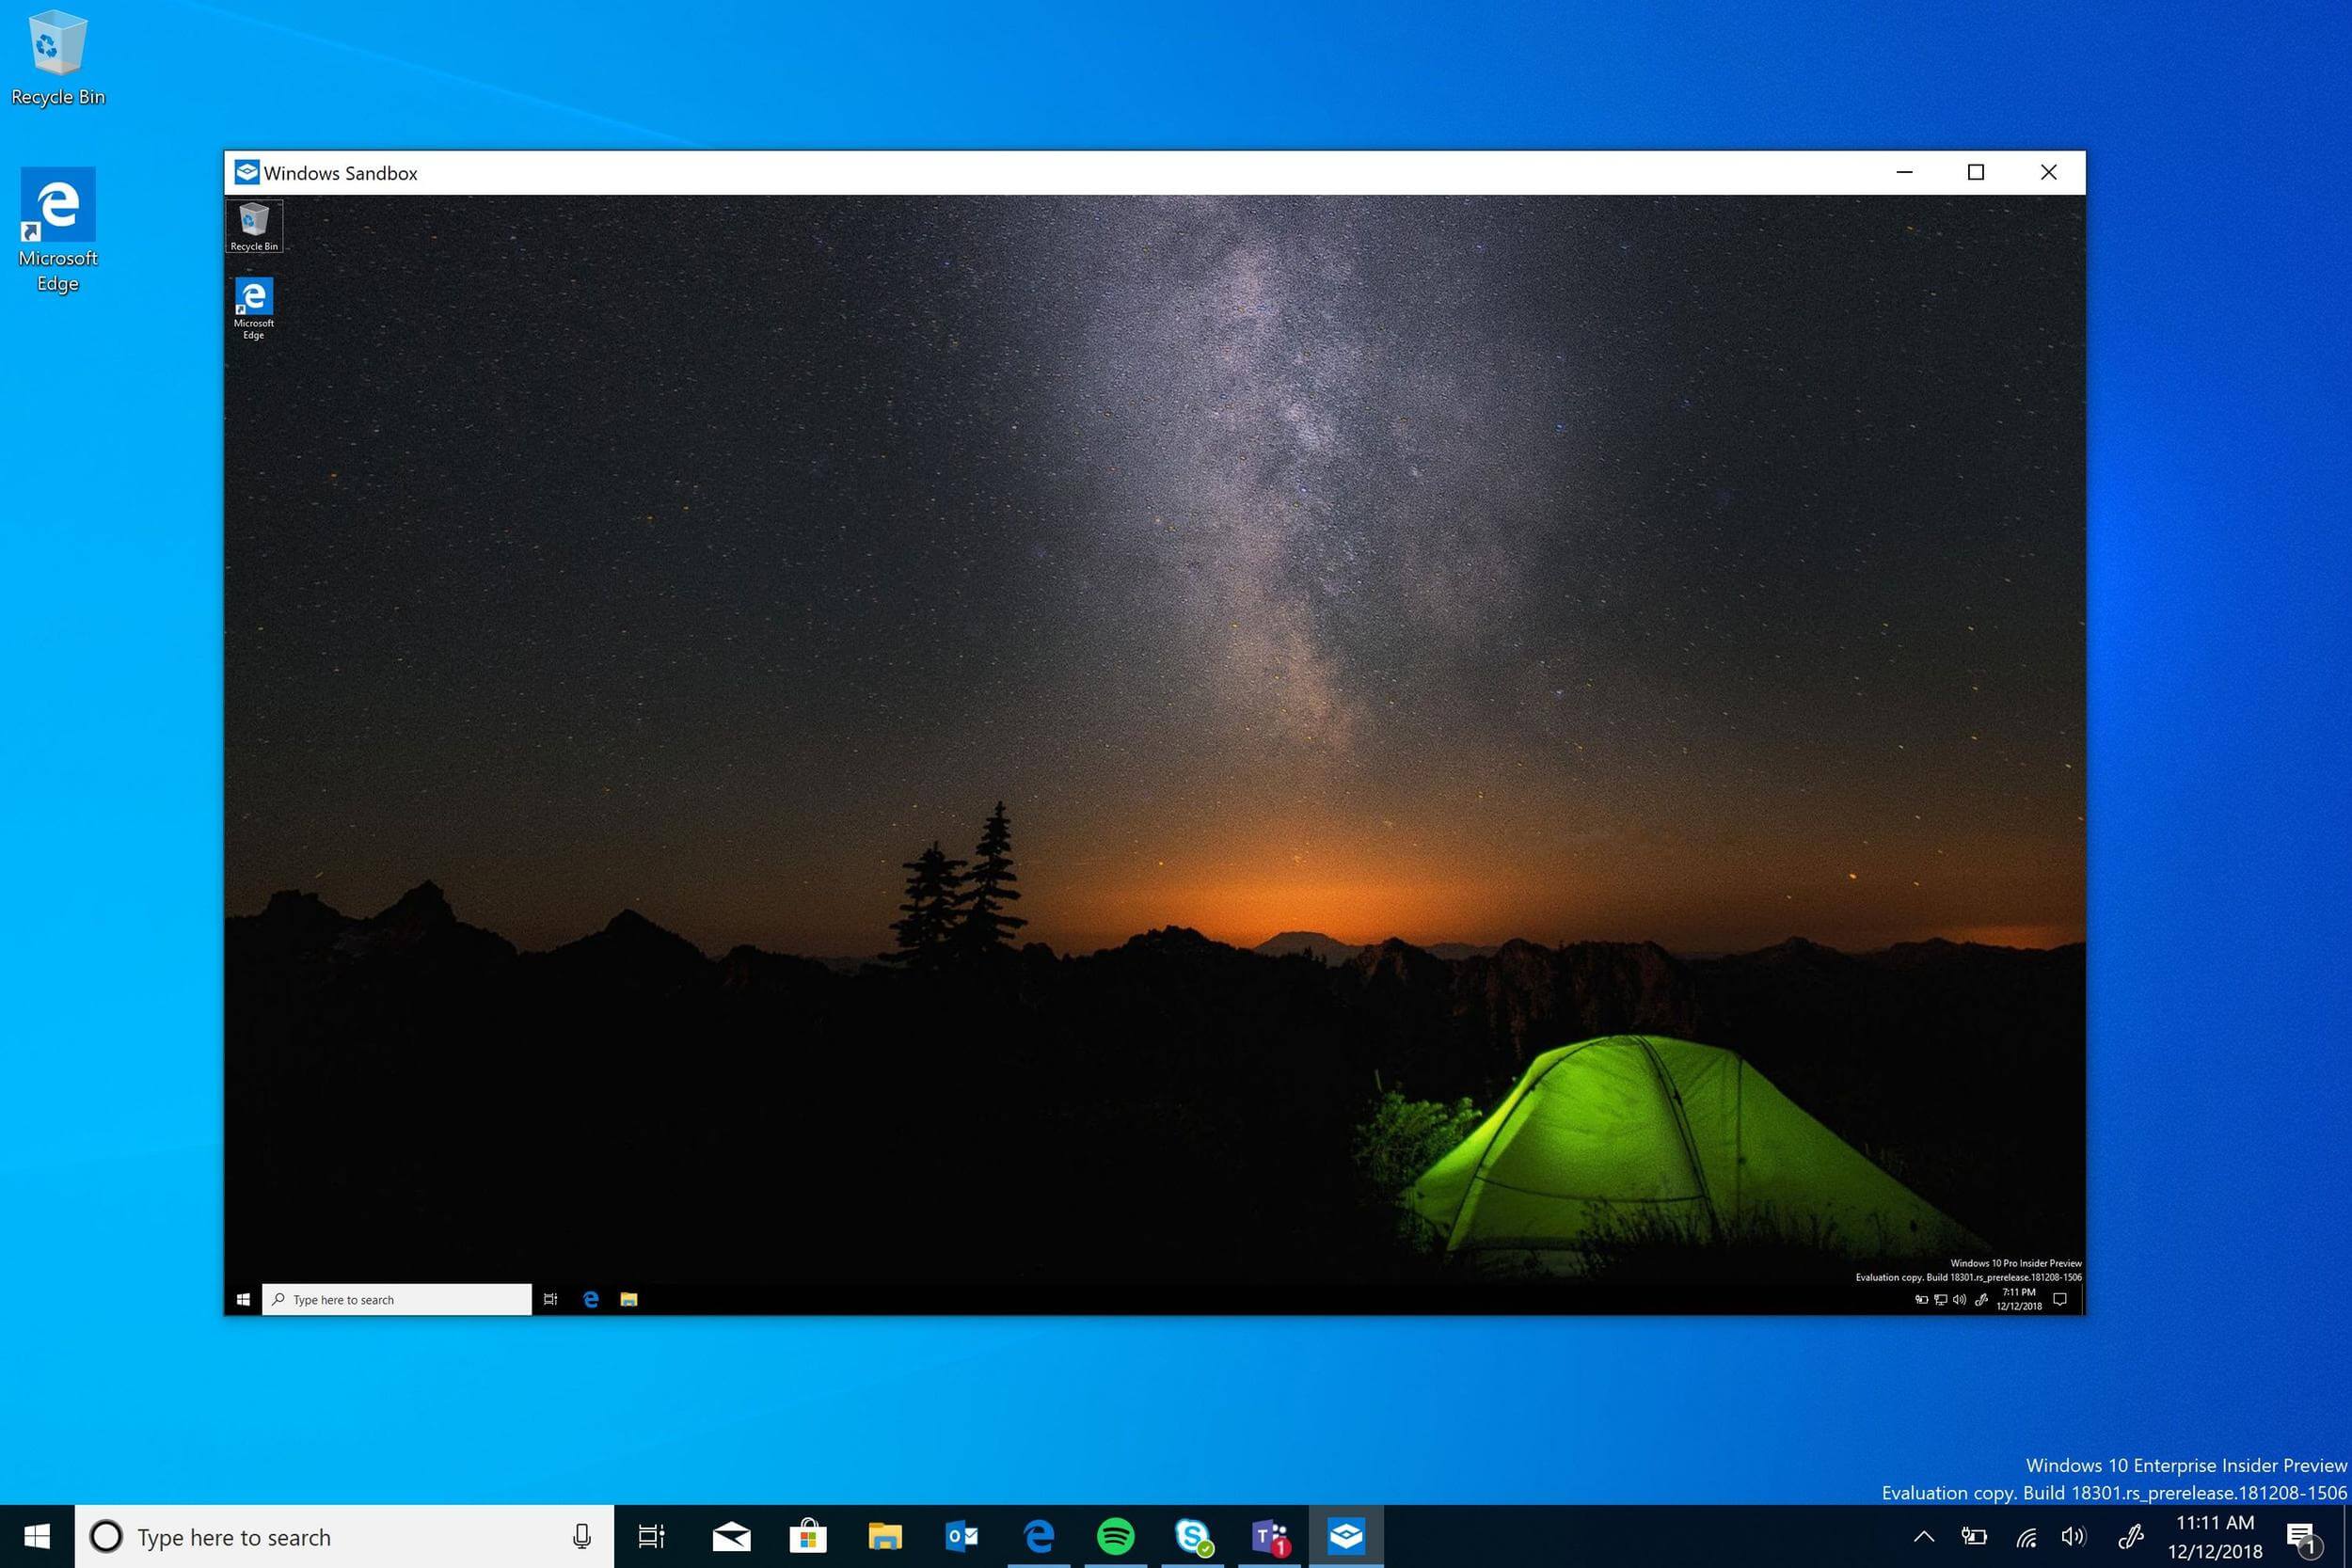 Microsoft's Windows Sandbox lets you run suspicious apps in isolation